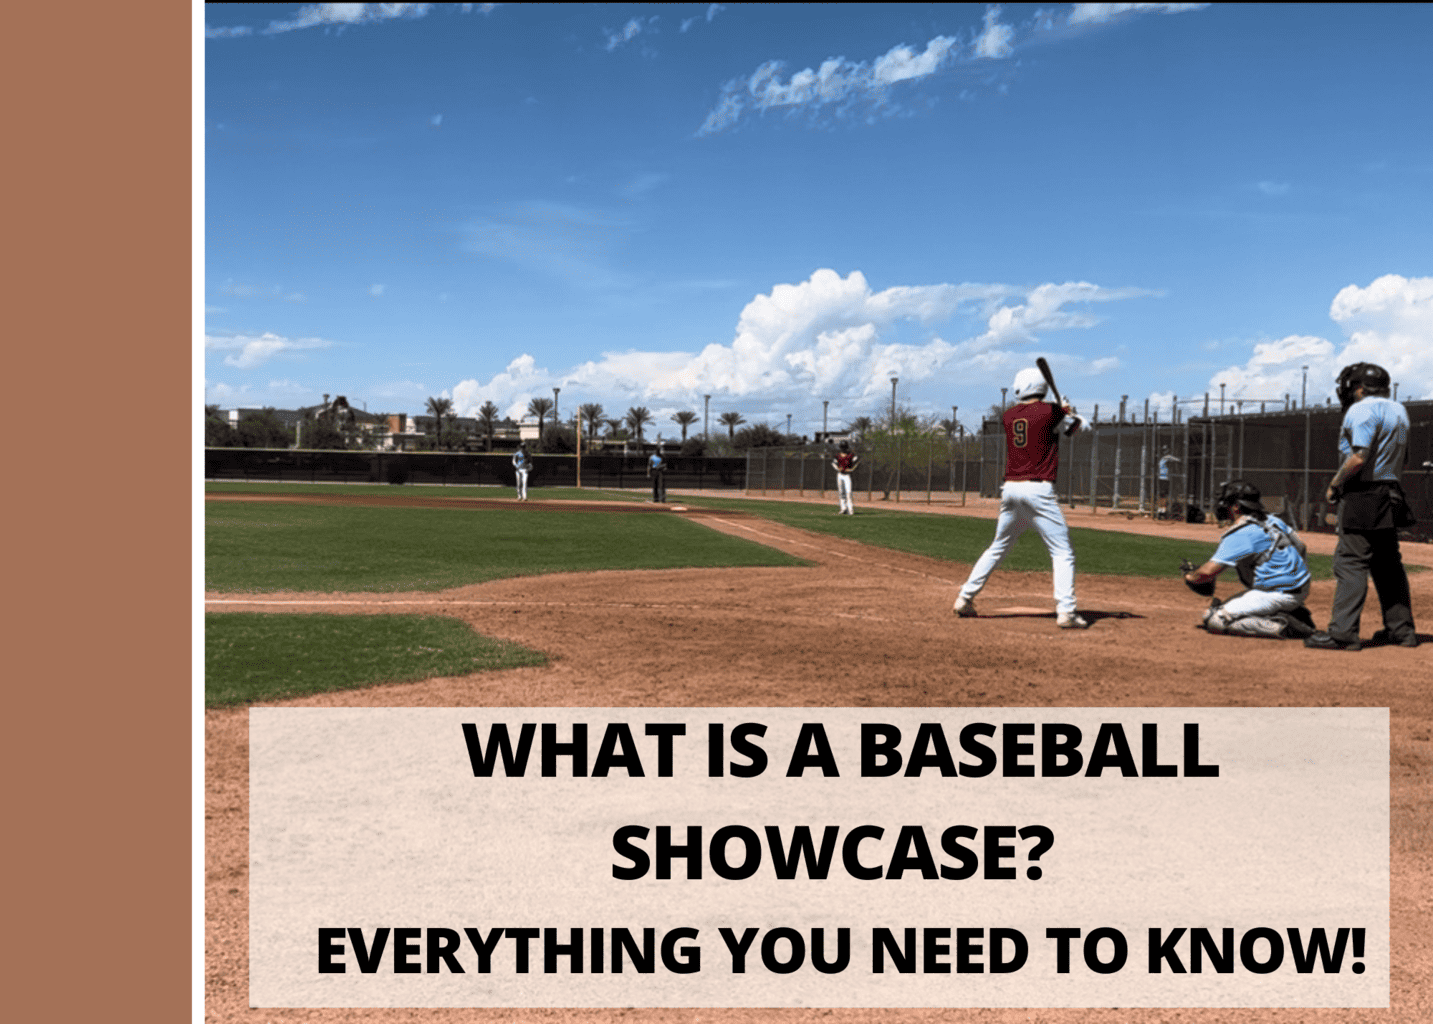 What a baseball showcase showcase